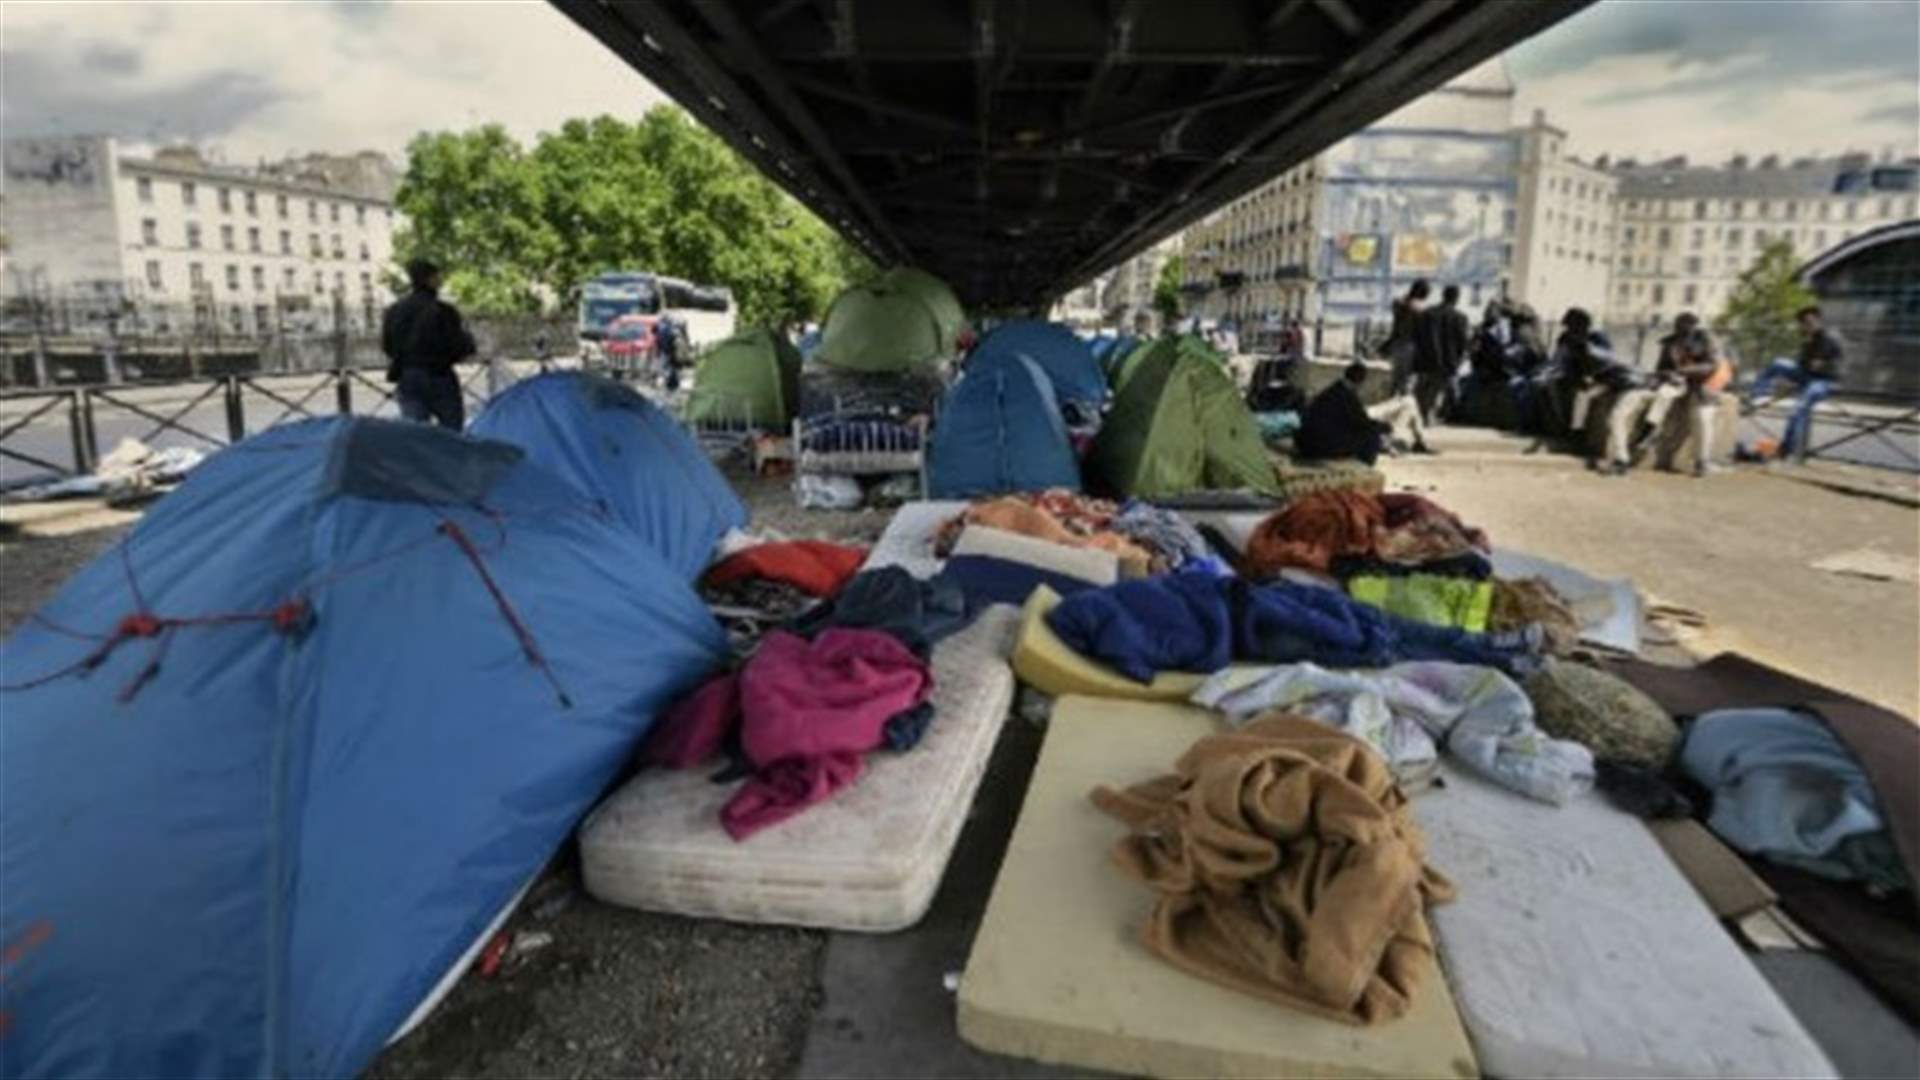 Police evacuate migrant families from Paris sidewalks